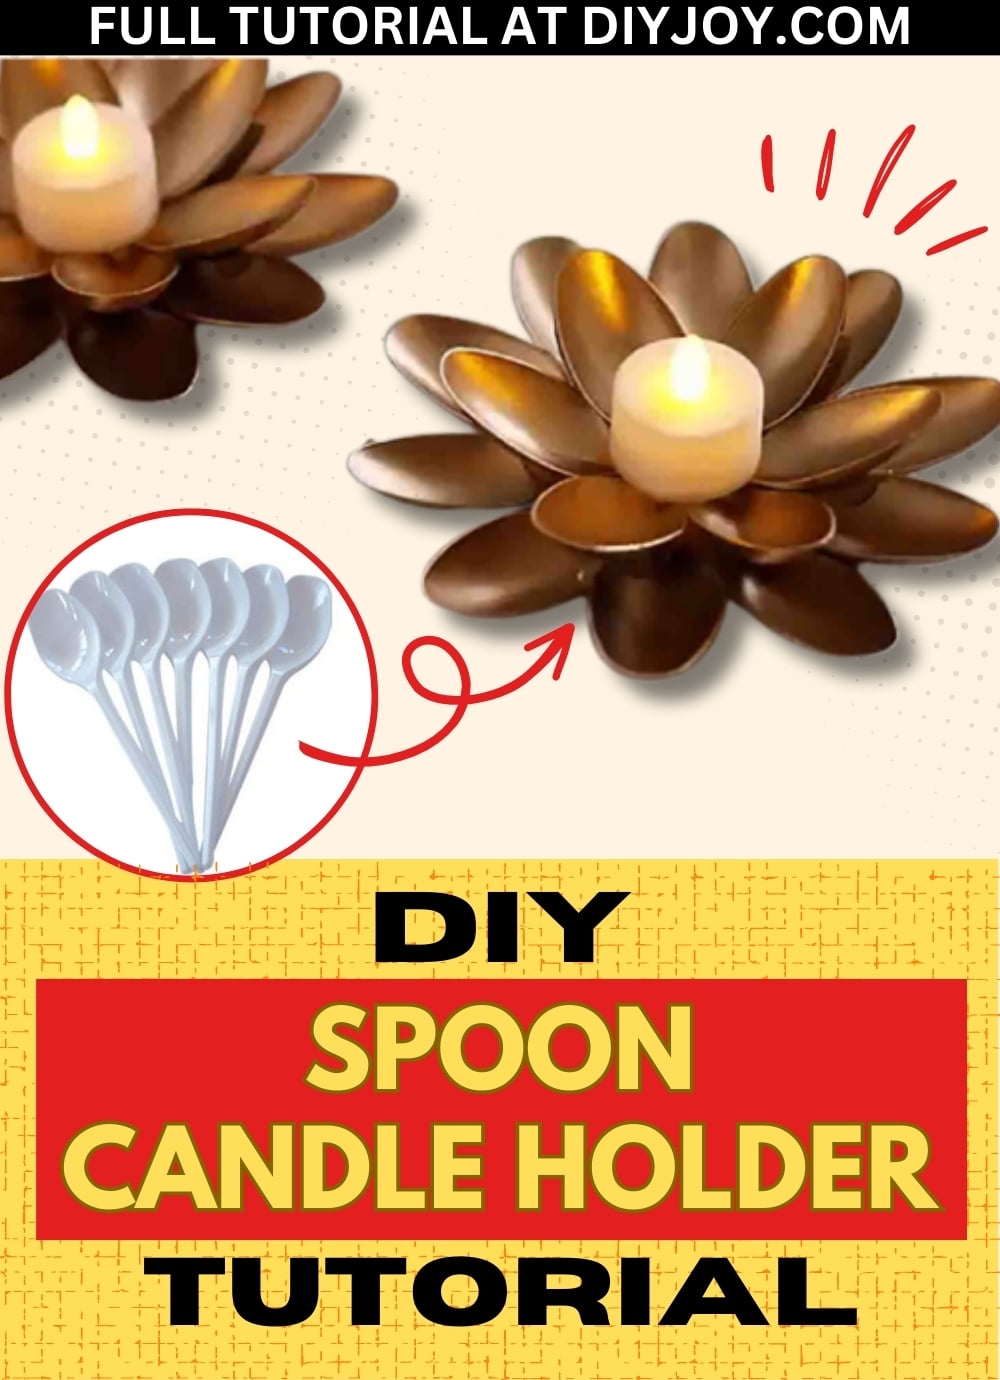 DIY Spoon Candle Holder Tutorial